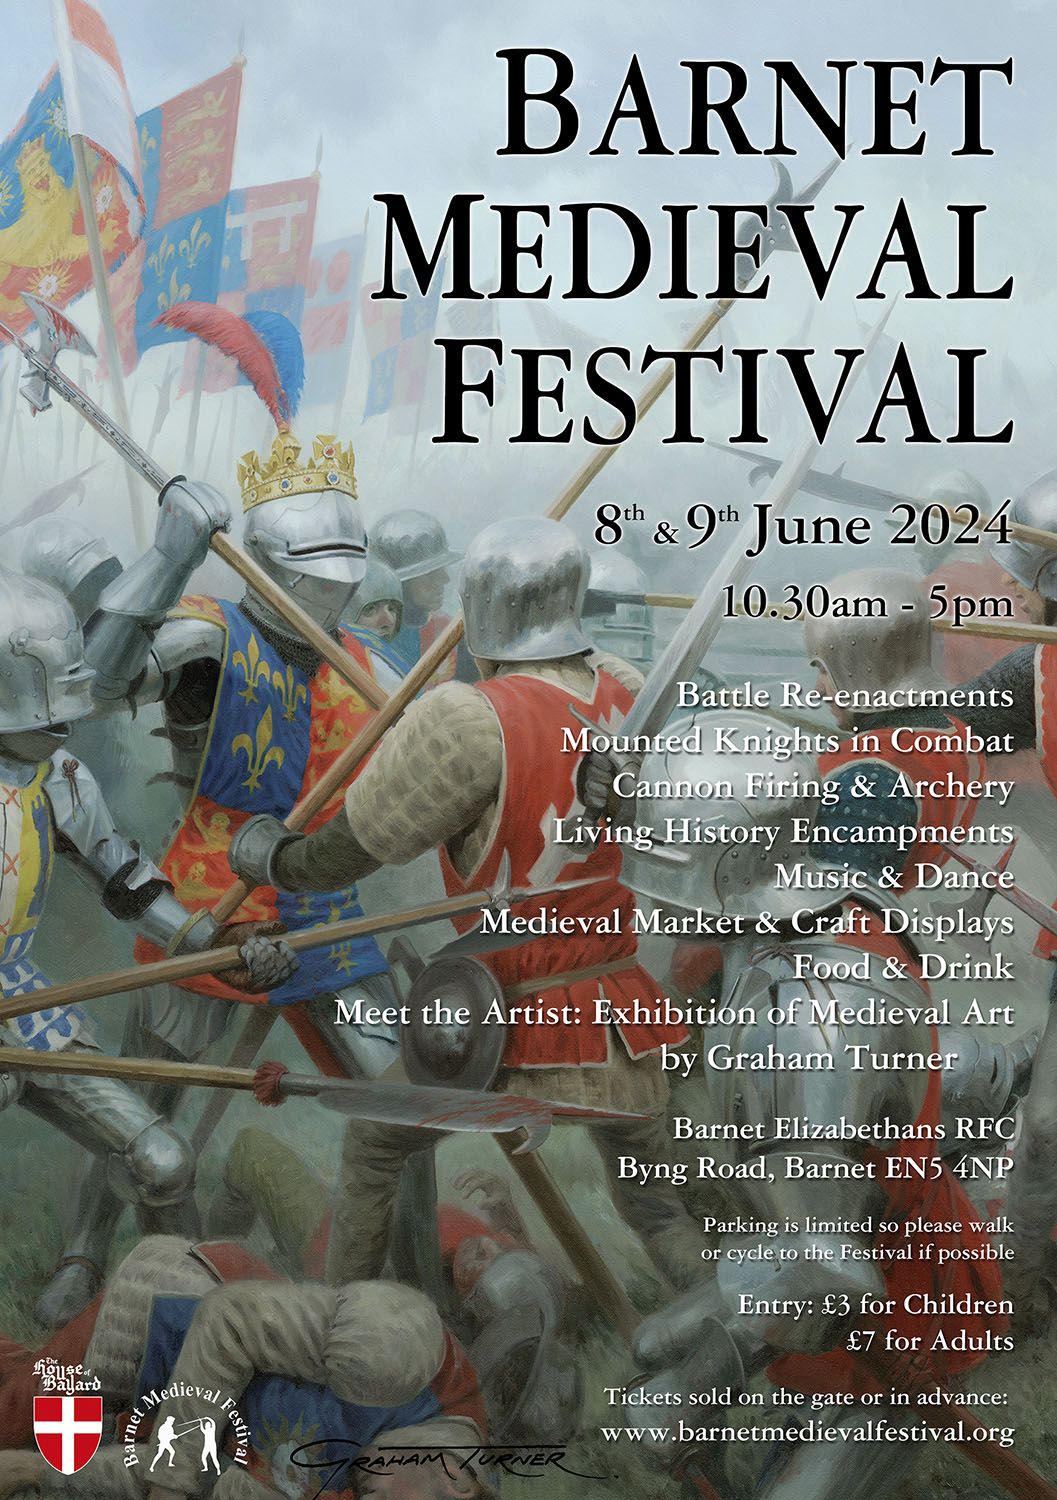 Barnet Medieval Festival Saturday 8th June 2024